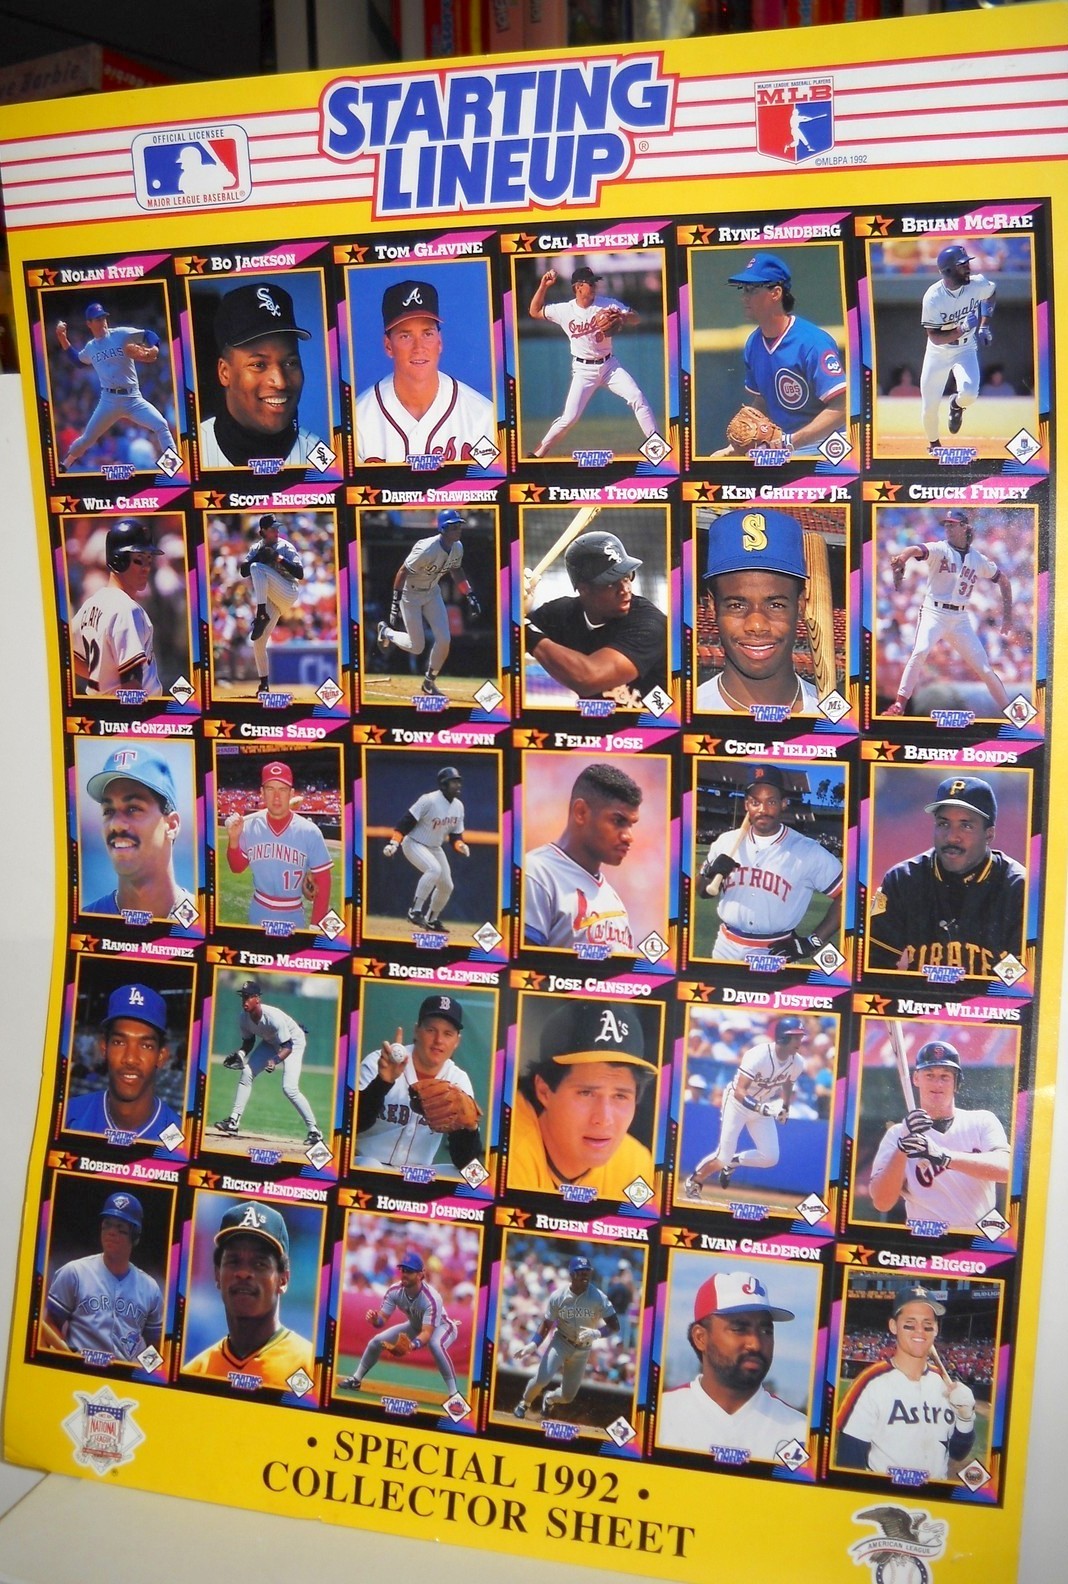 1992 Kenner Starting Lineup Baseball Card poster size uncut collector sheet